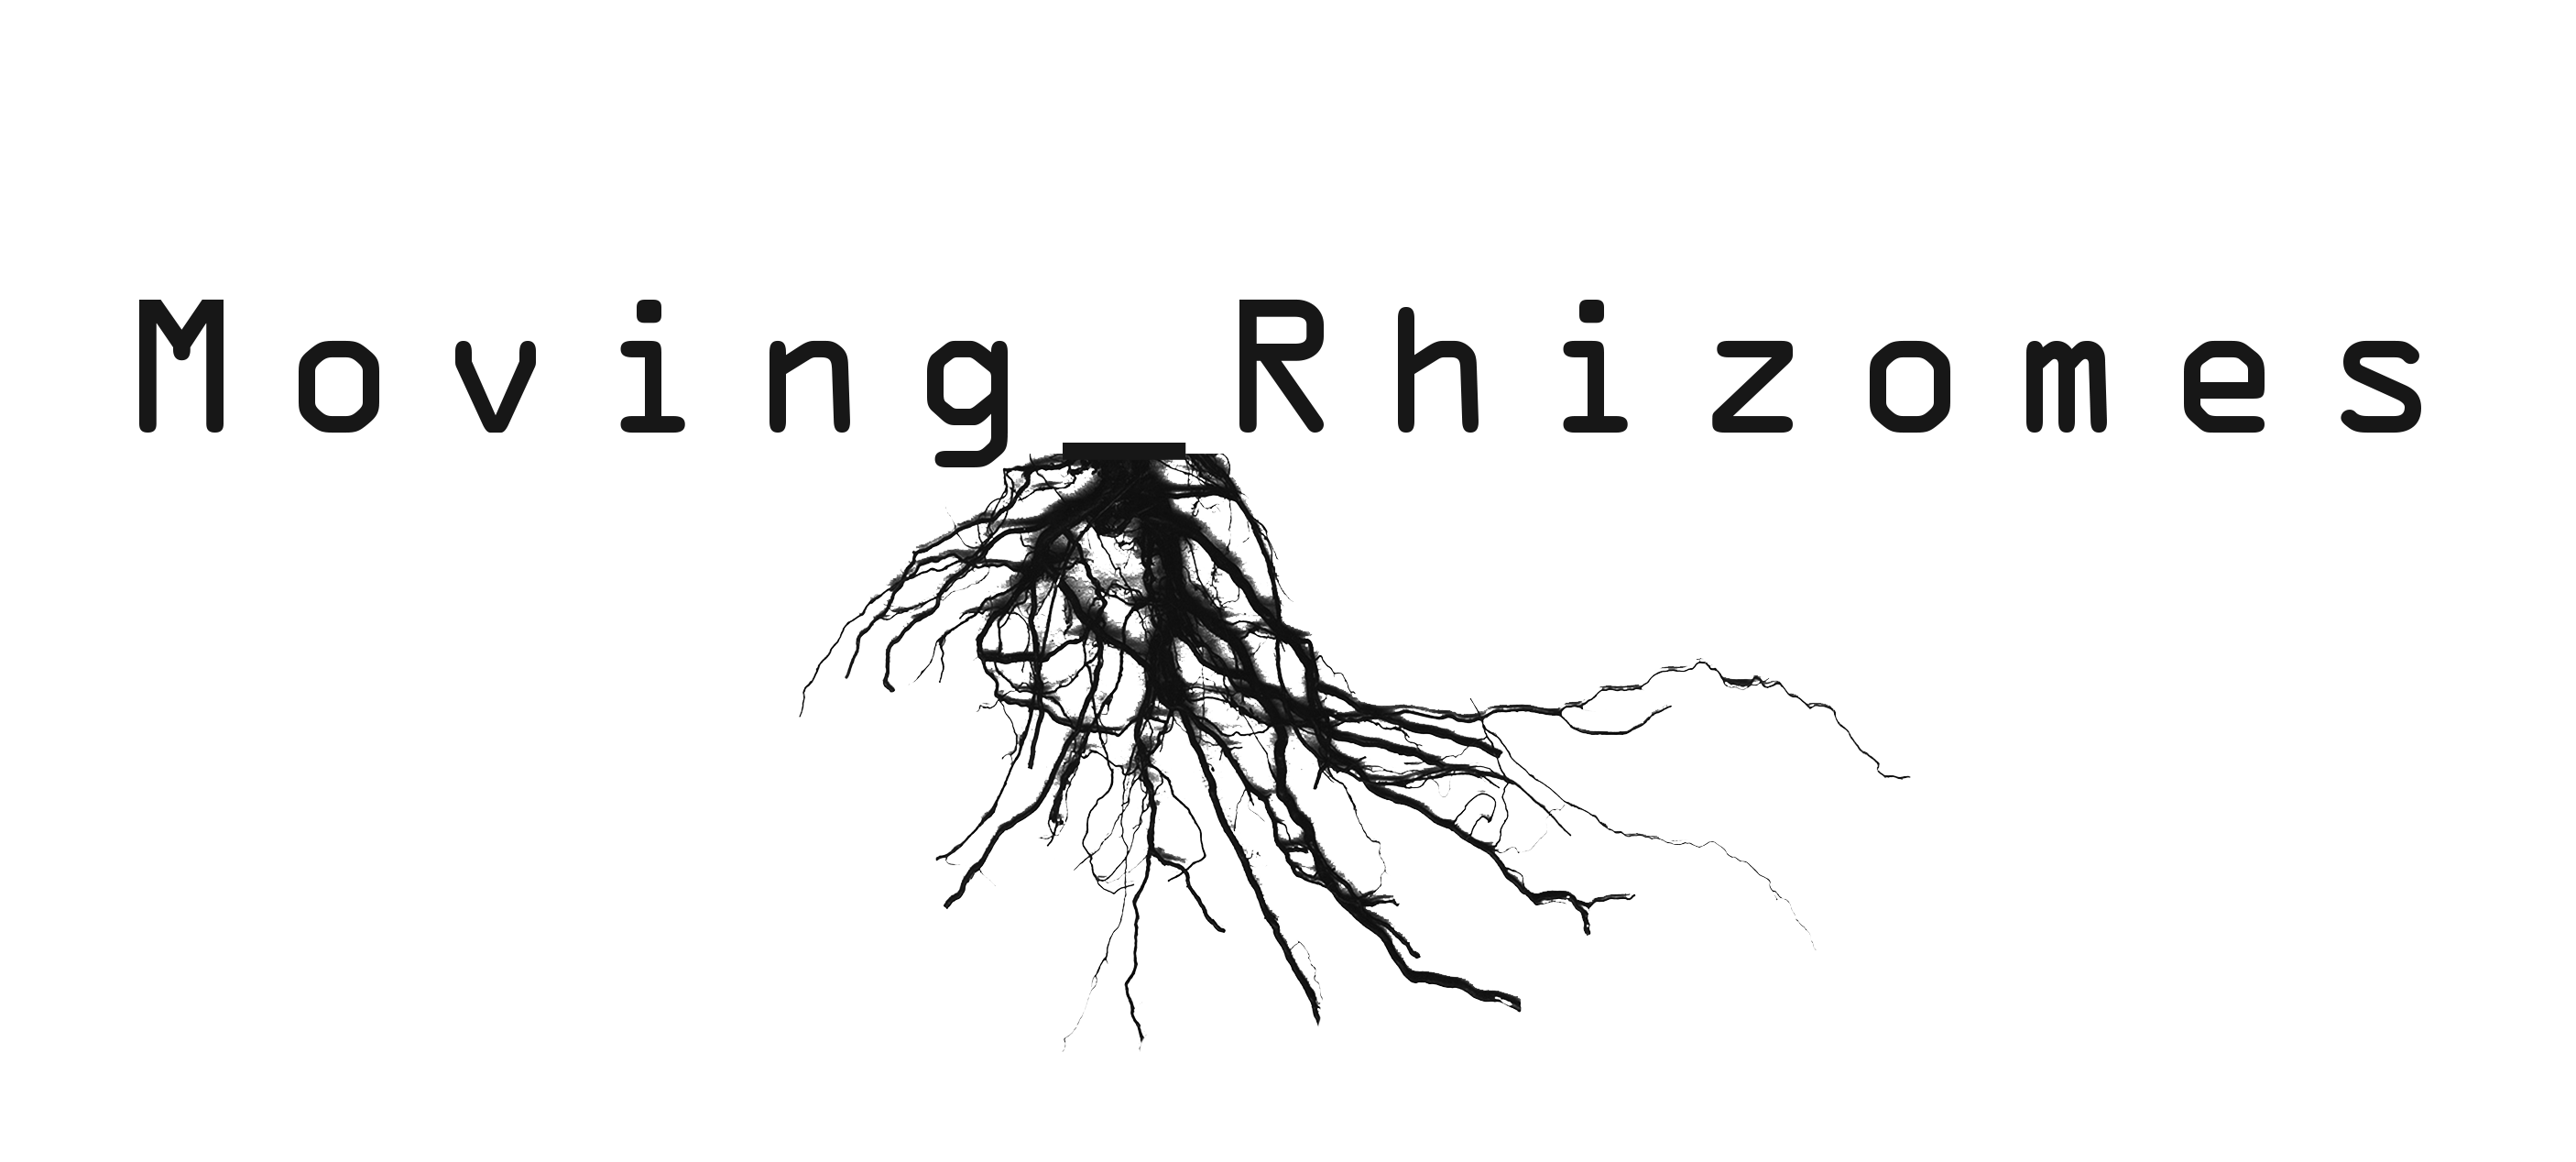 Moving Rhizomes Logo